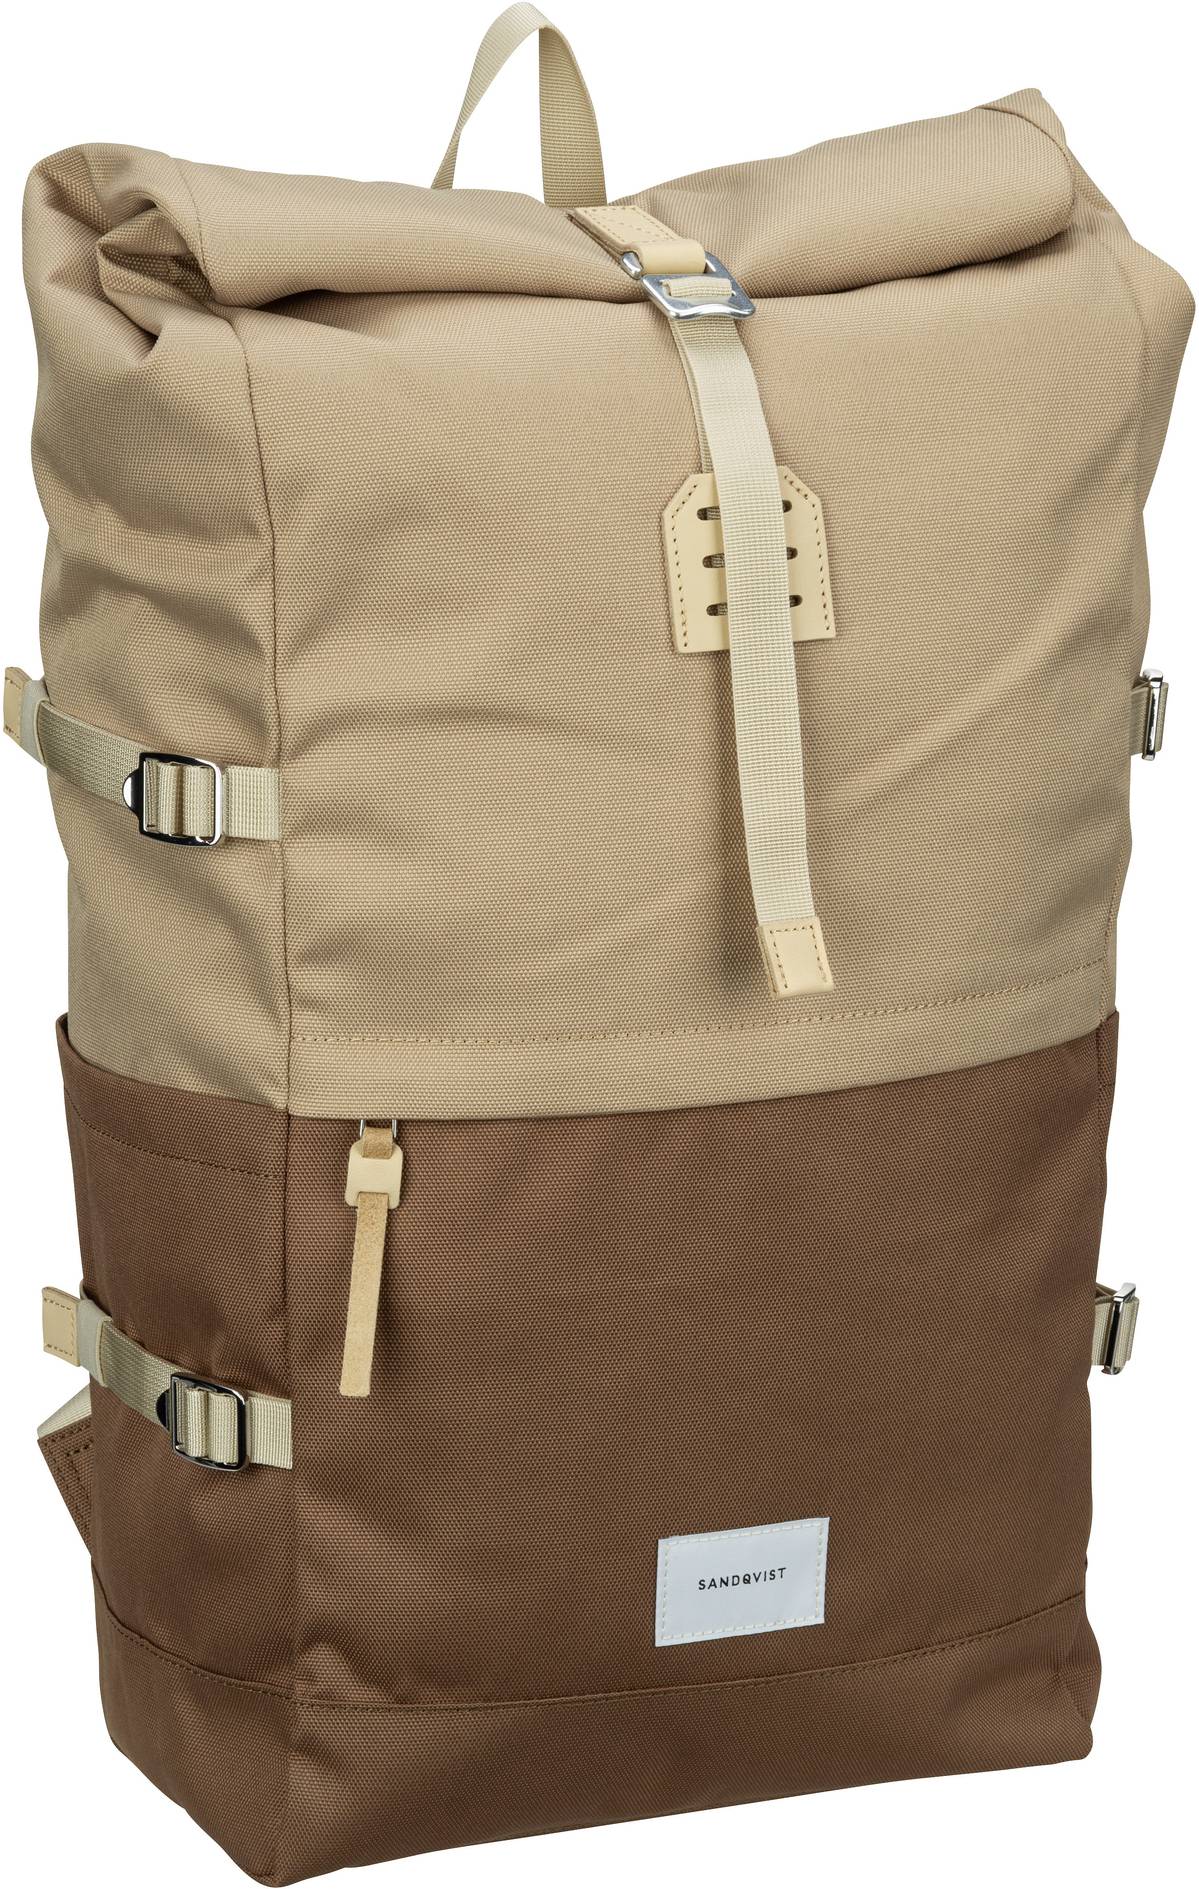 Sandqvist Bernt Rolltop Backpack - Multi Brown/Natural Leather